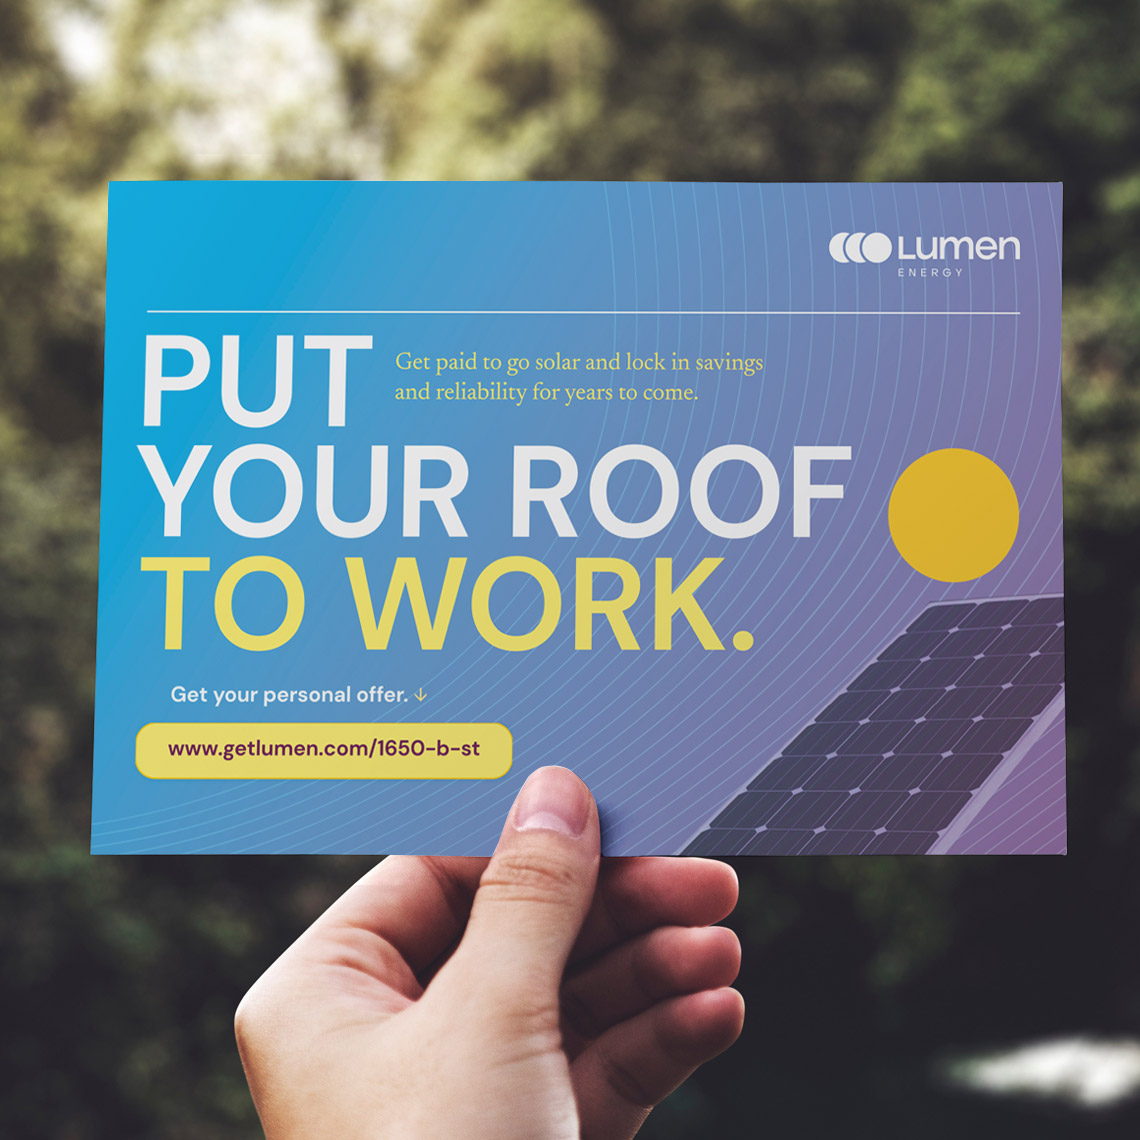 Sales postcard for Lumen Energy designed by Kilter